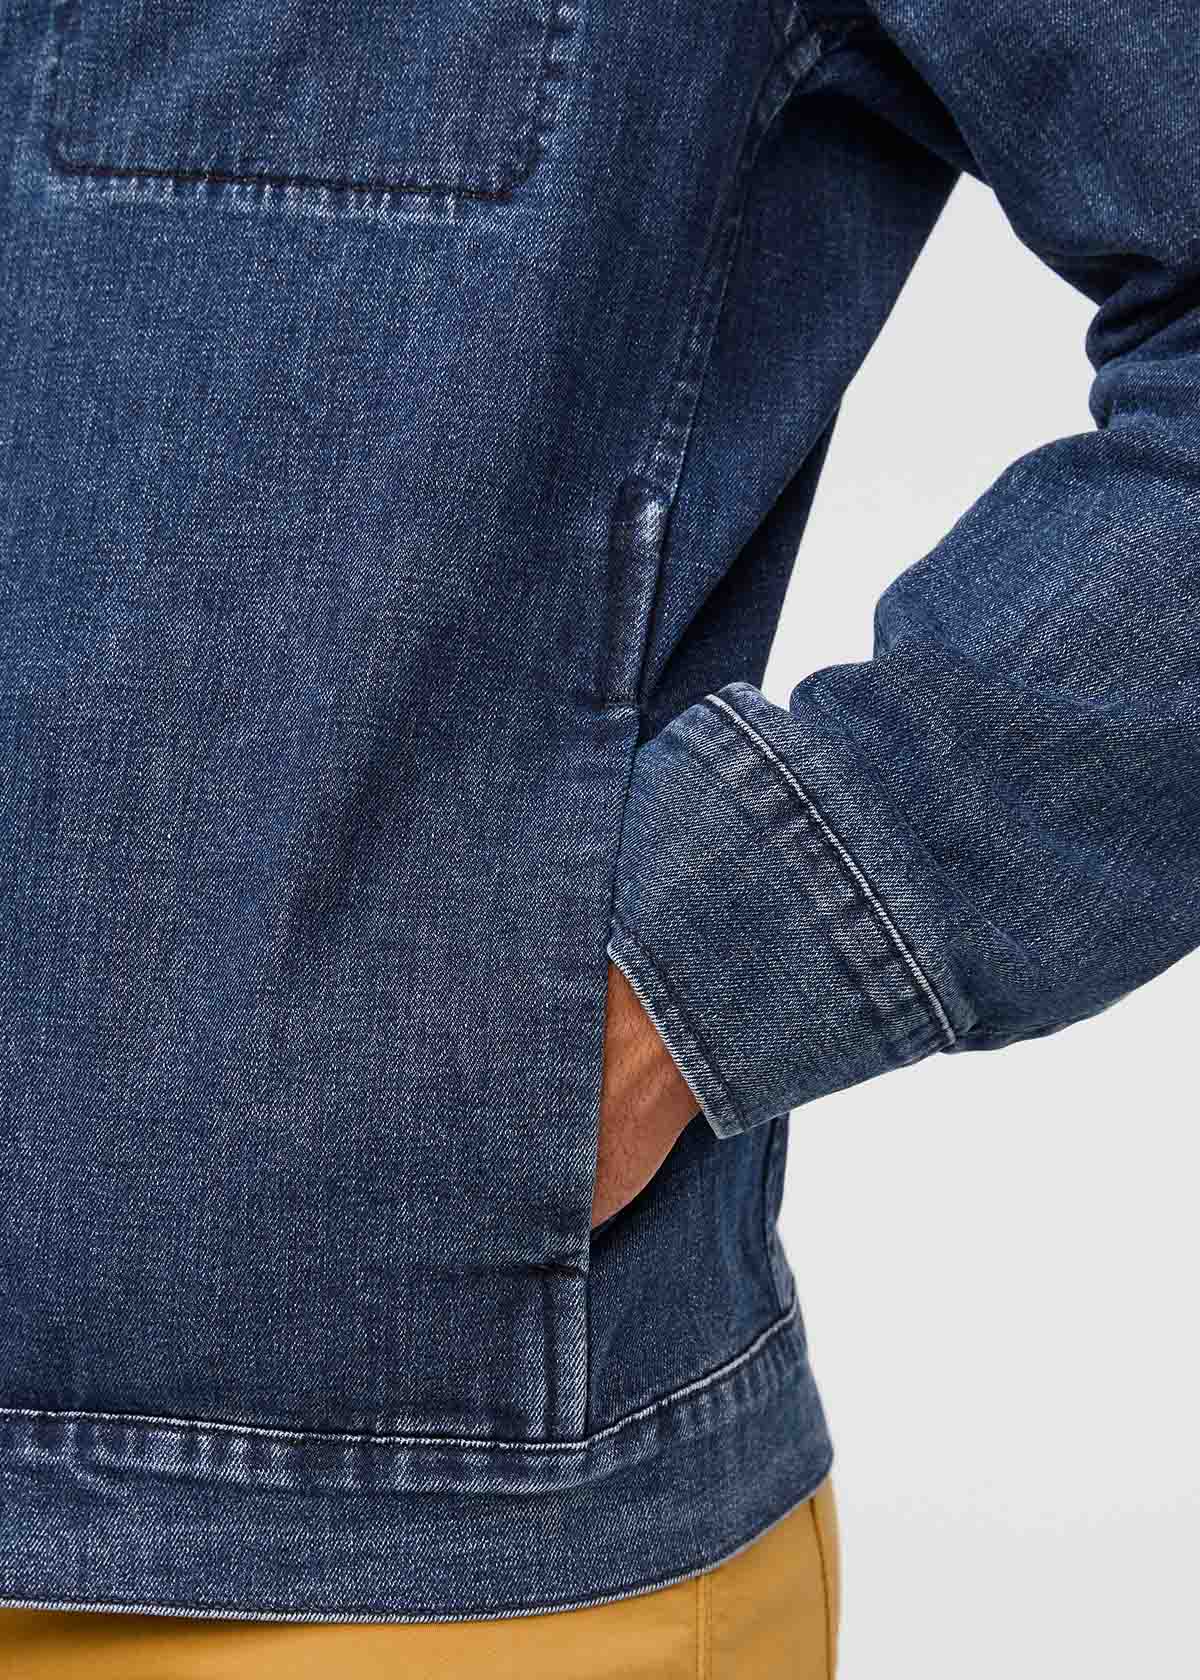 mens medium blue water resistant stretch denim jacket pocket detail